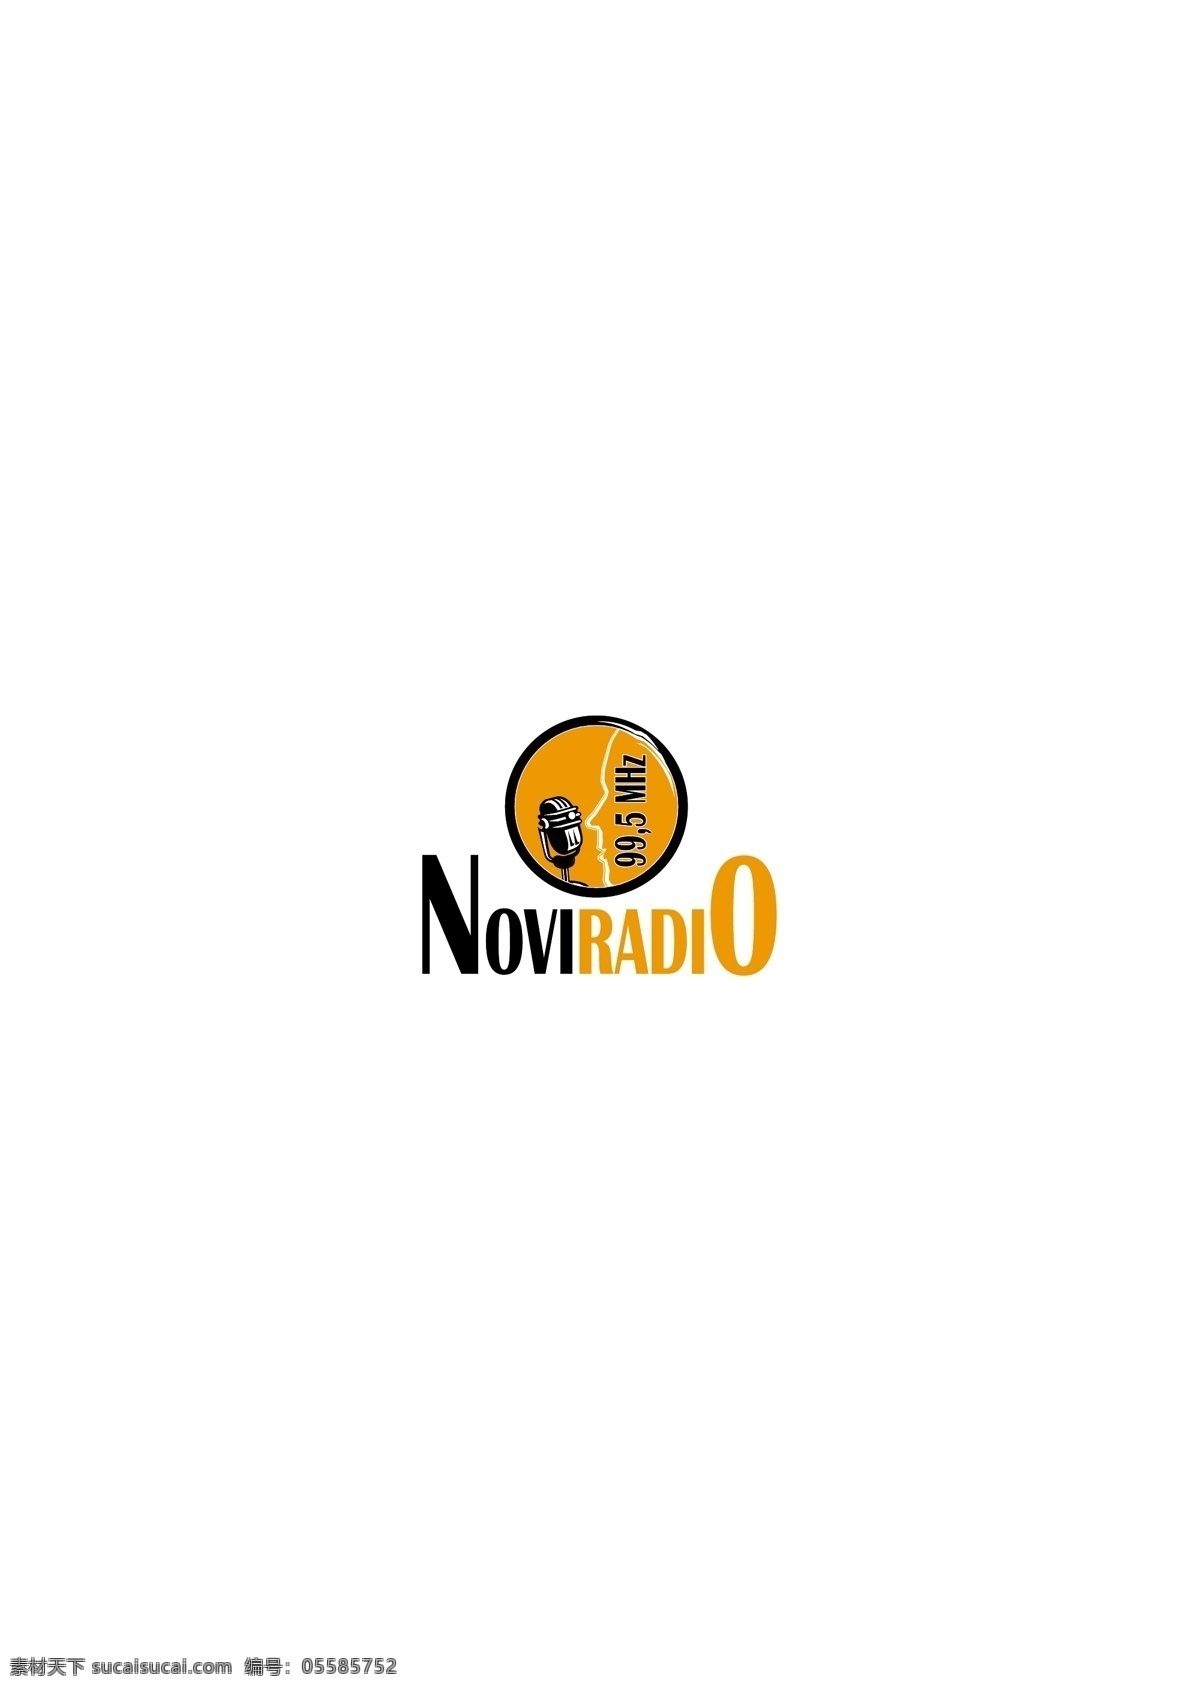 novi logo大全 logo 设计欣赏 商业矢量 矢量下载 radio 标志设计 欣赏 网页矢量 矢量图 其他矢量图